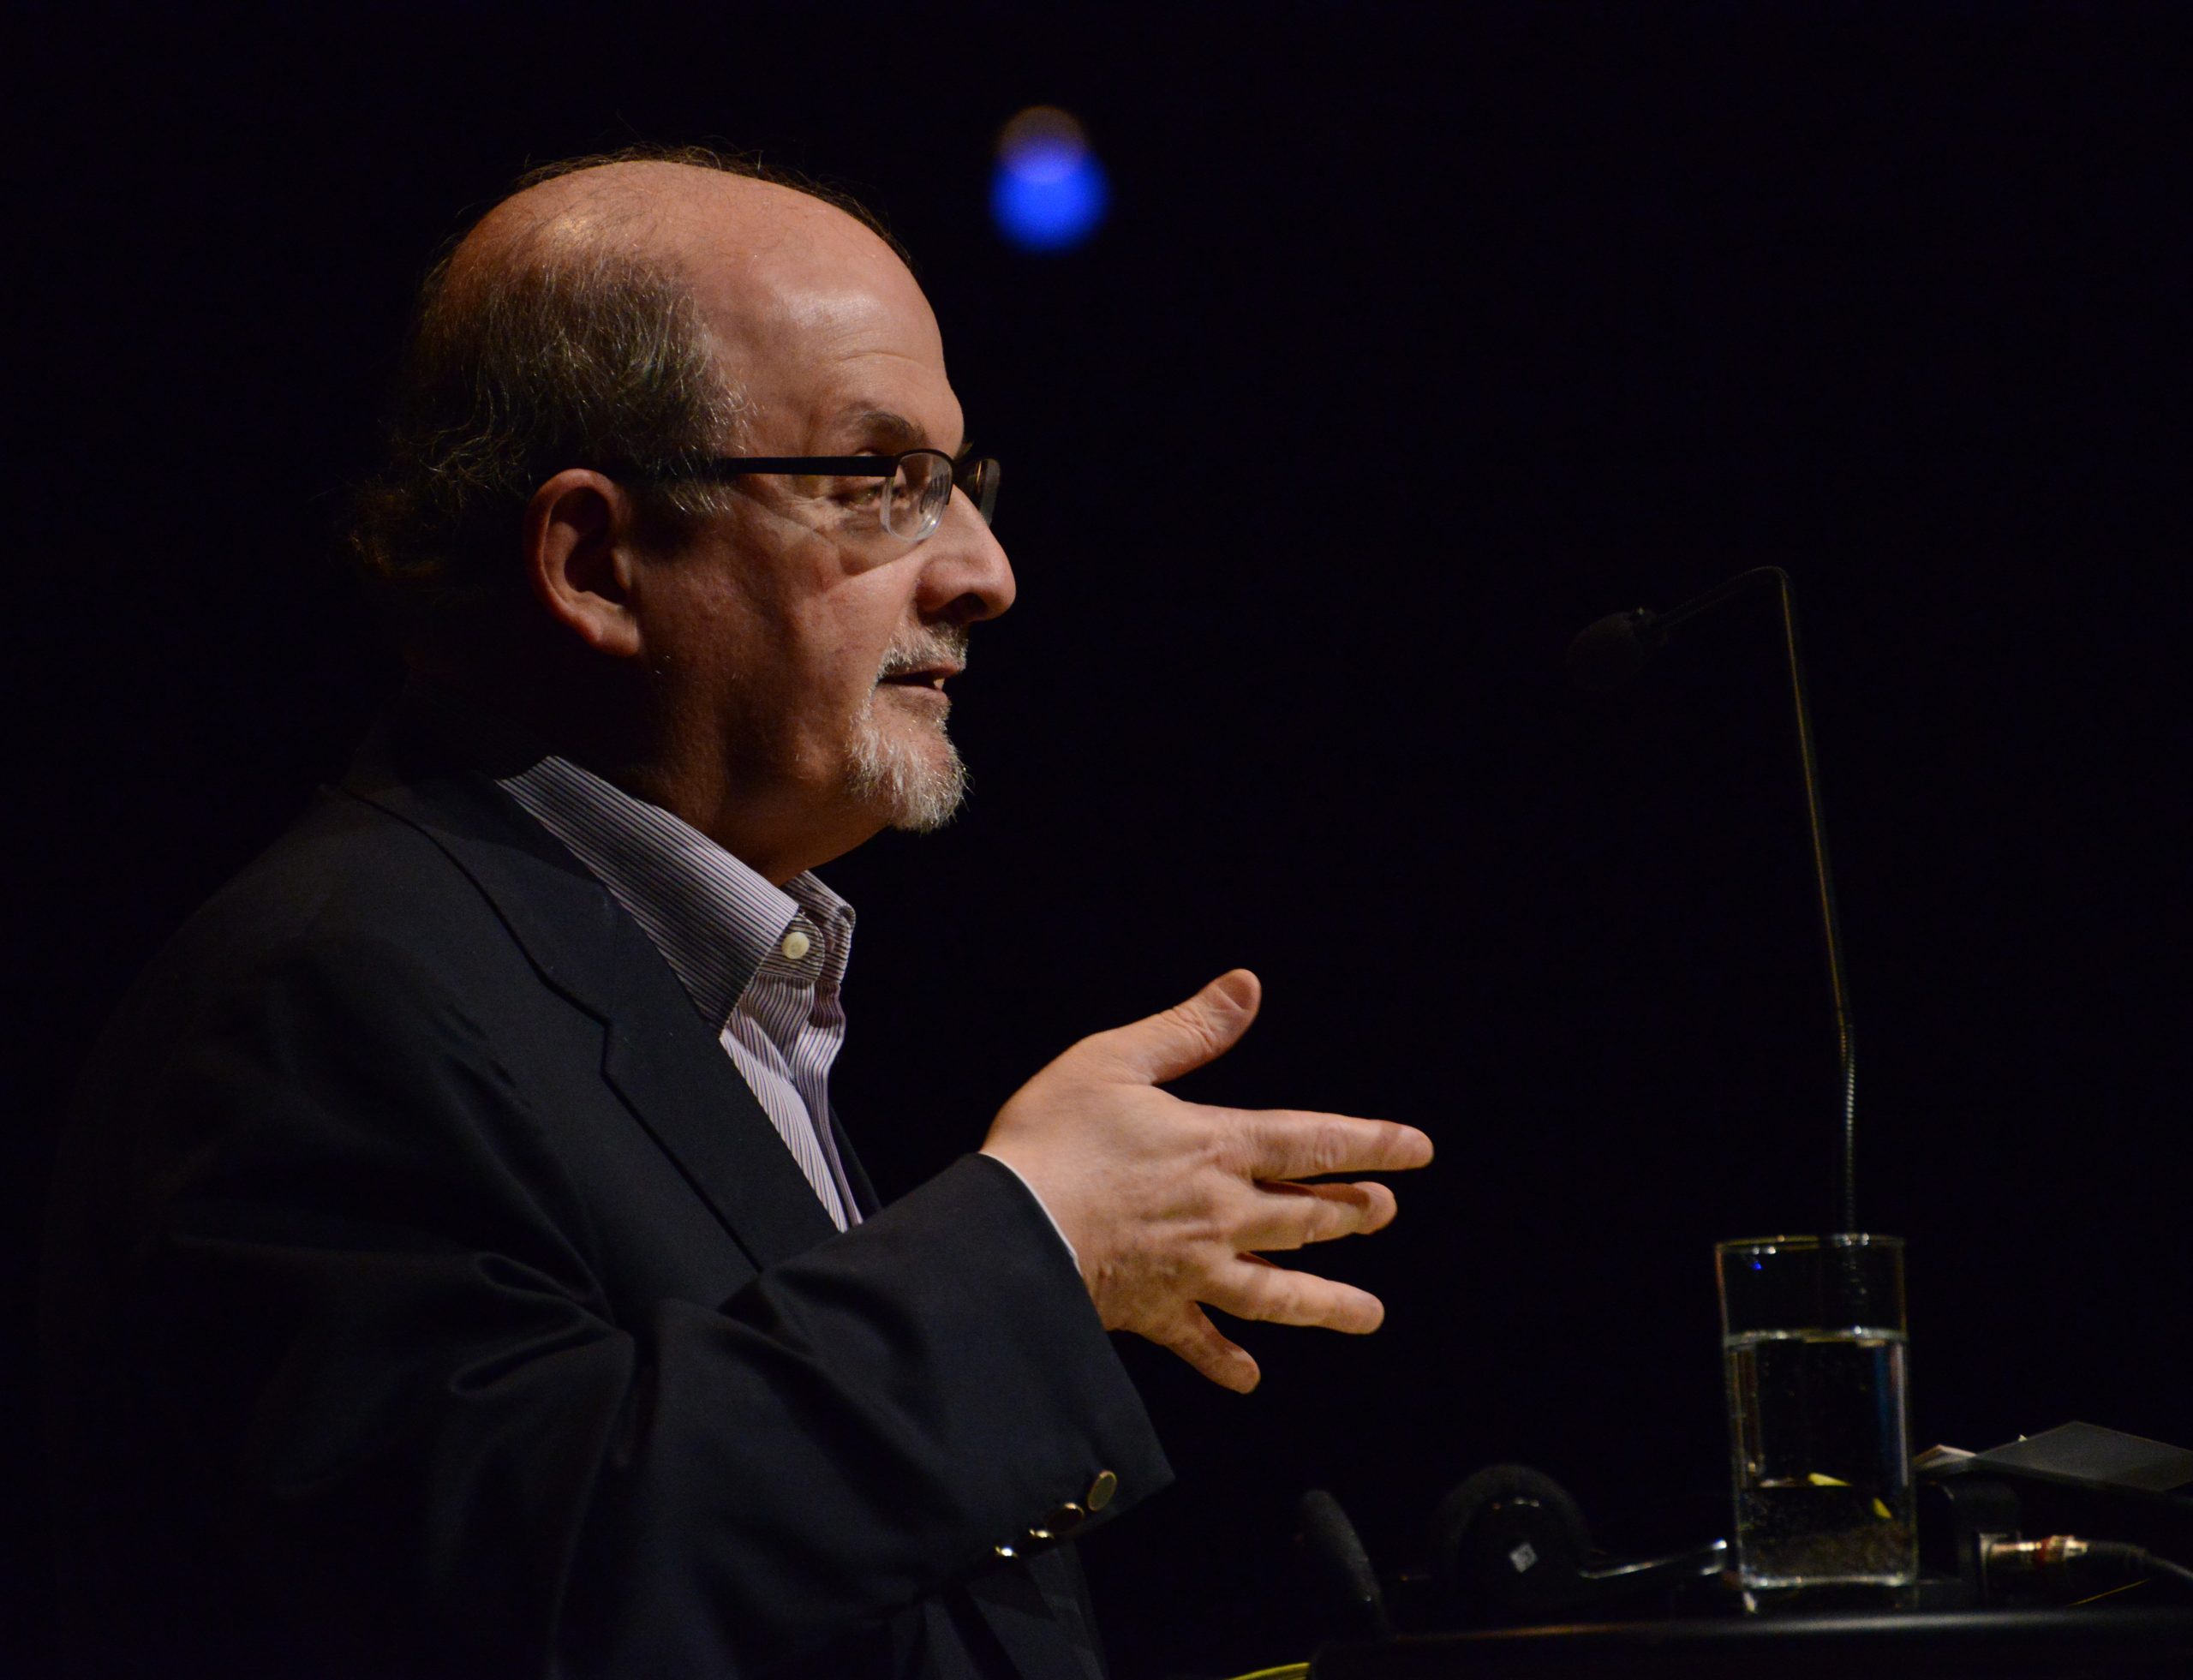 Writers and free speech champions celebrate Salman Rushdie’s work